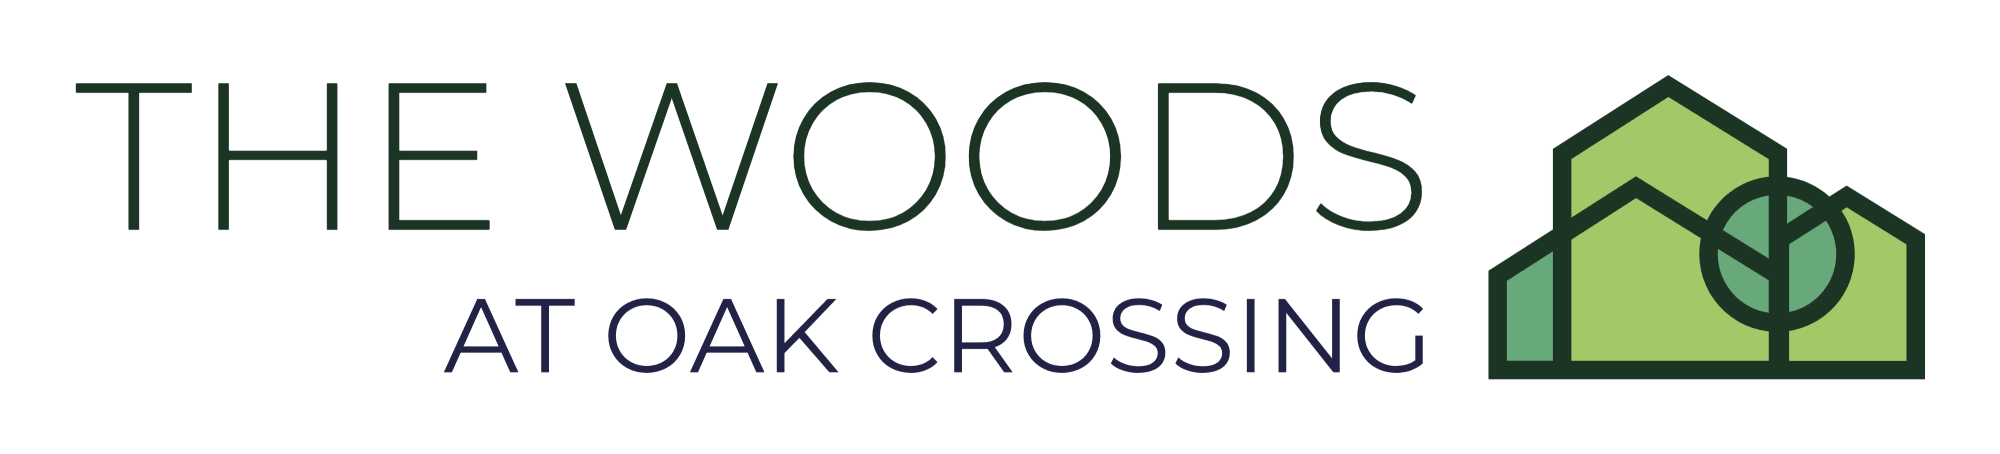 Woods at Oak Crossing